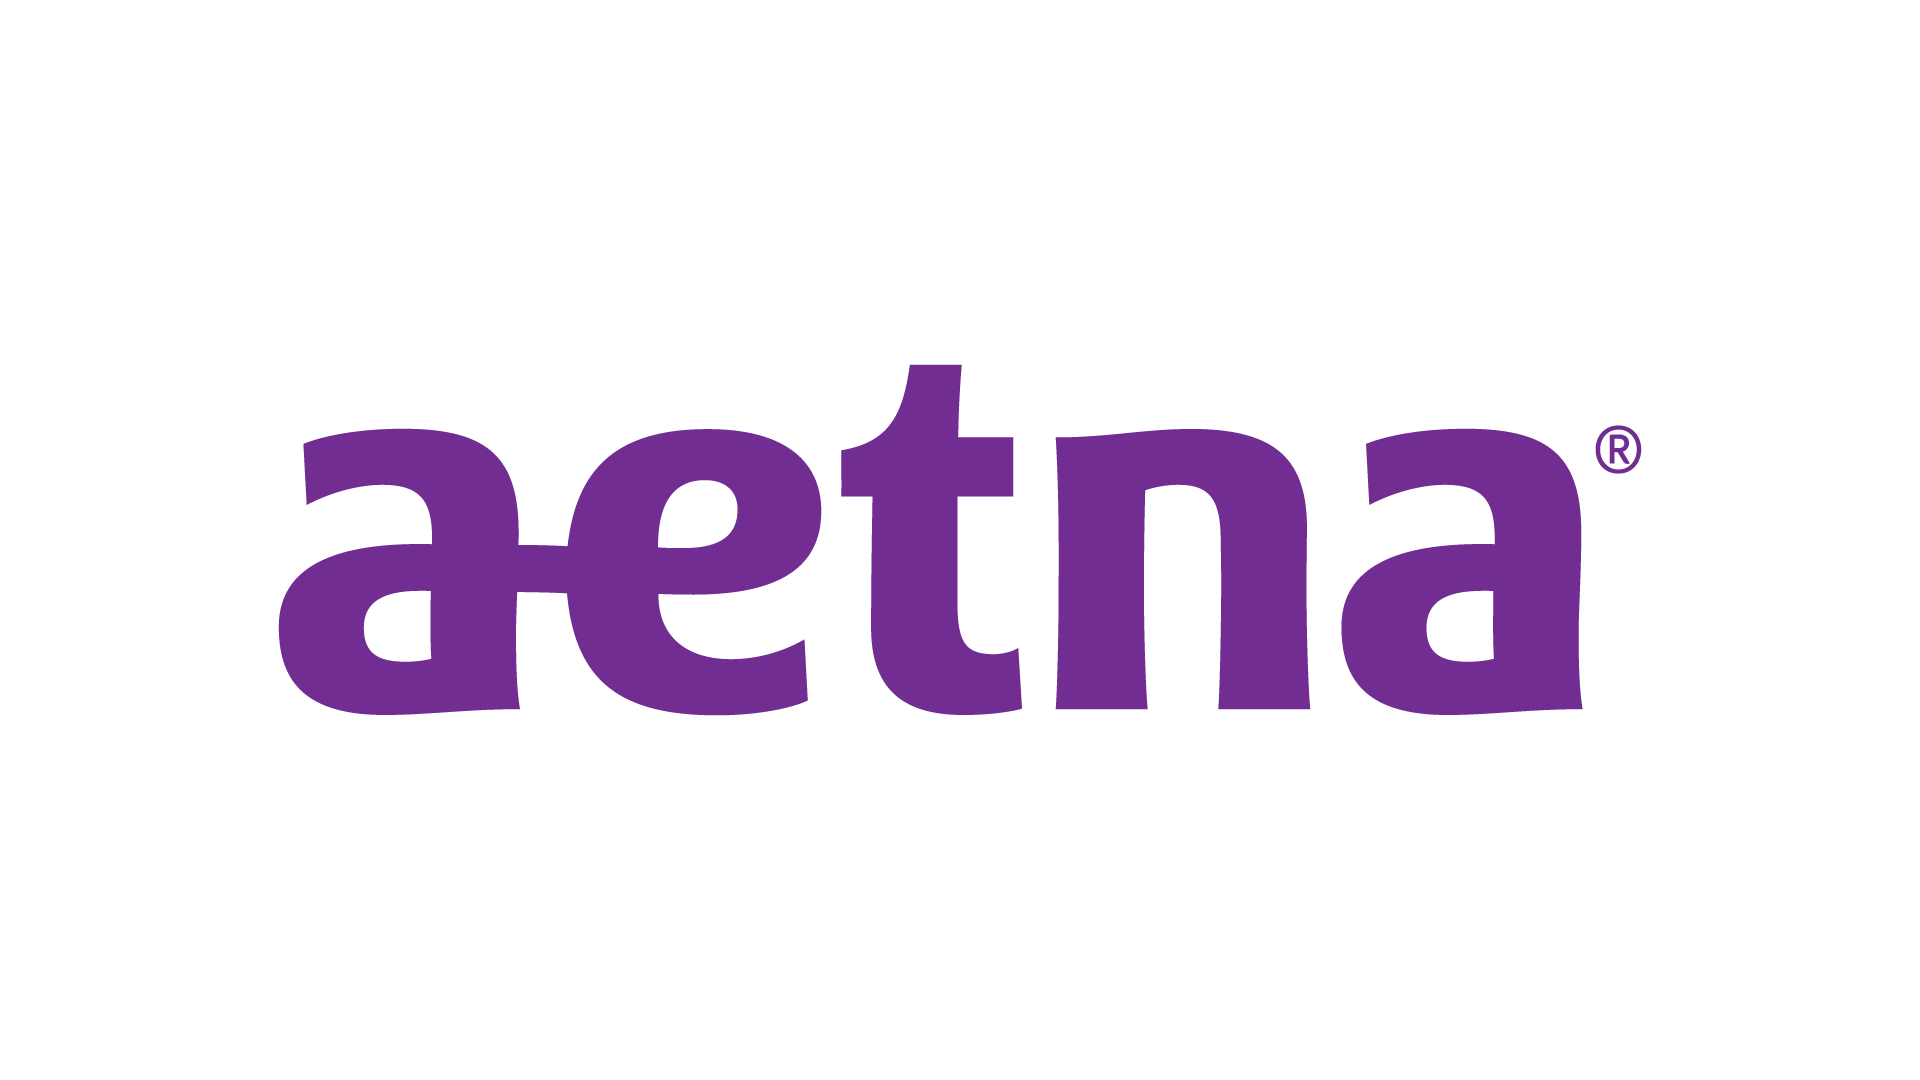 Aetna-logo